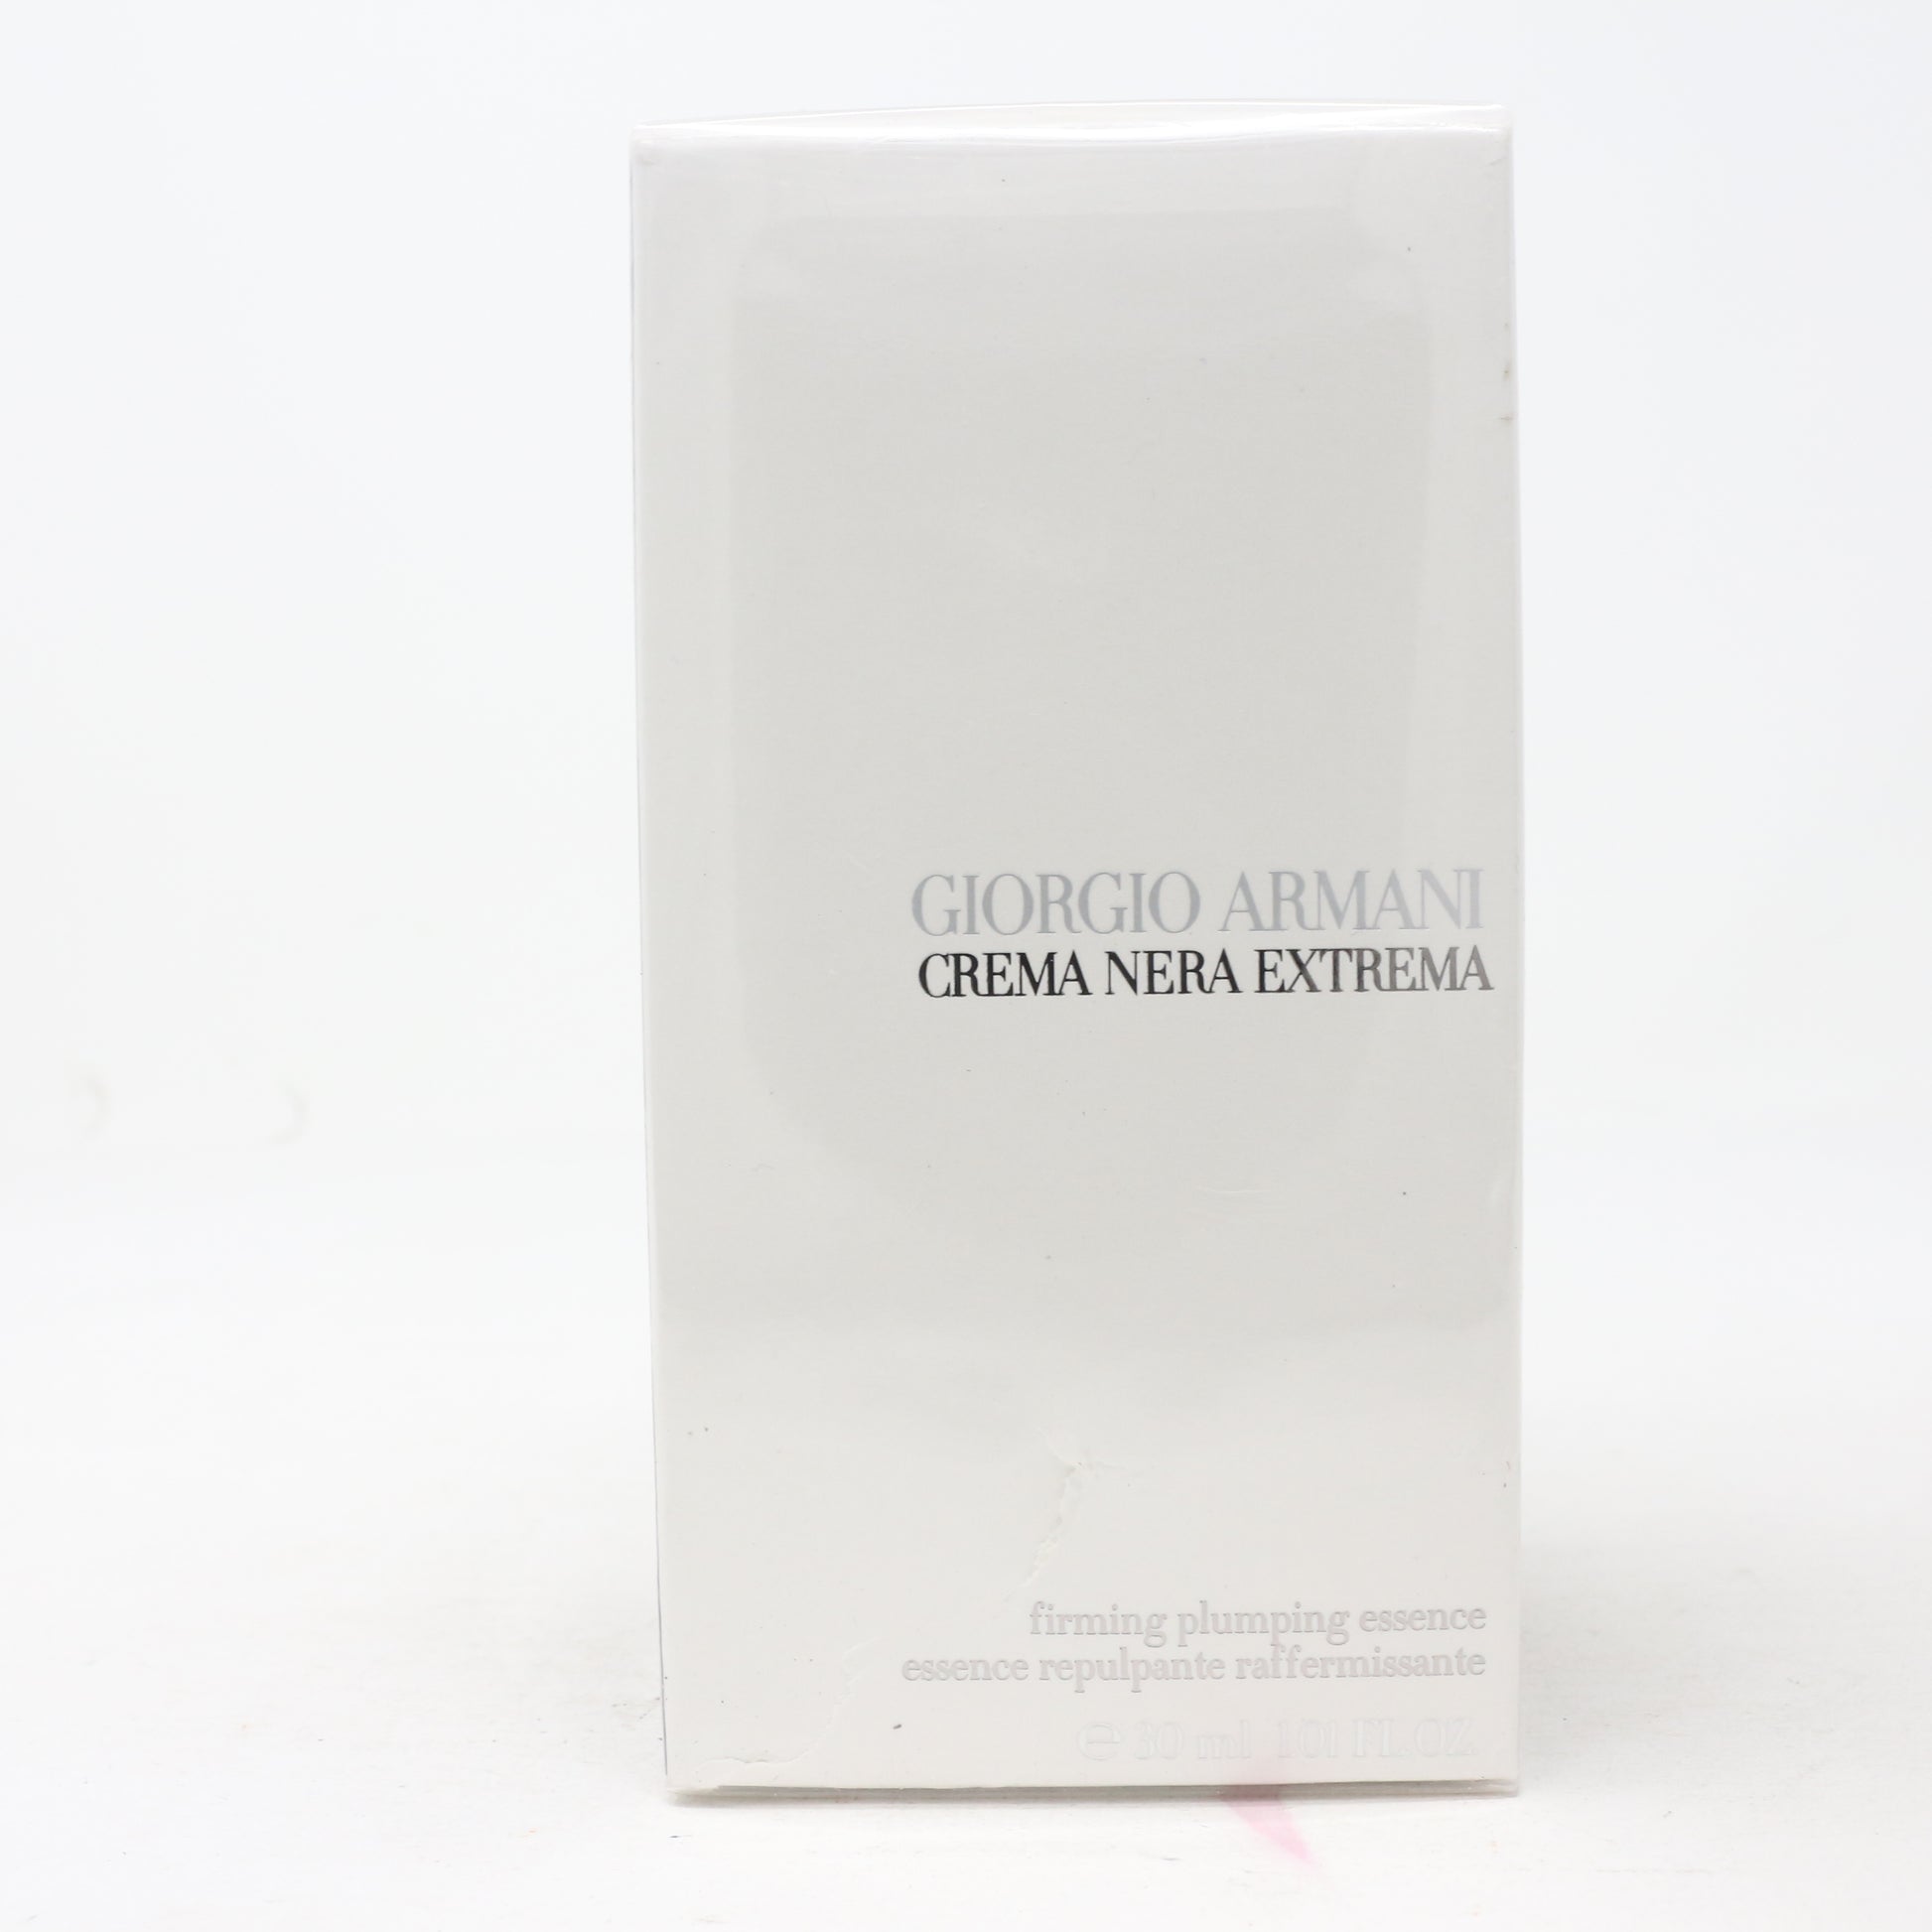 Crema Nera Extrema Firming Plumping Essence 30 ml